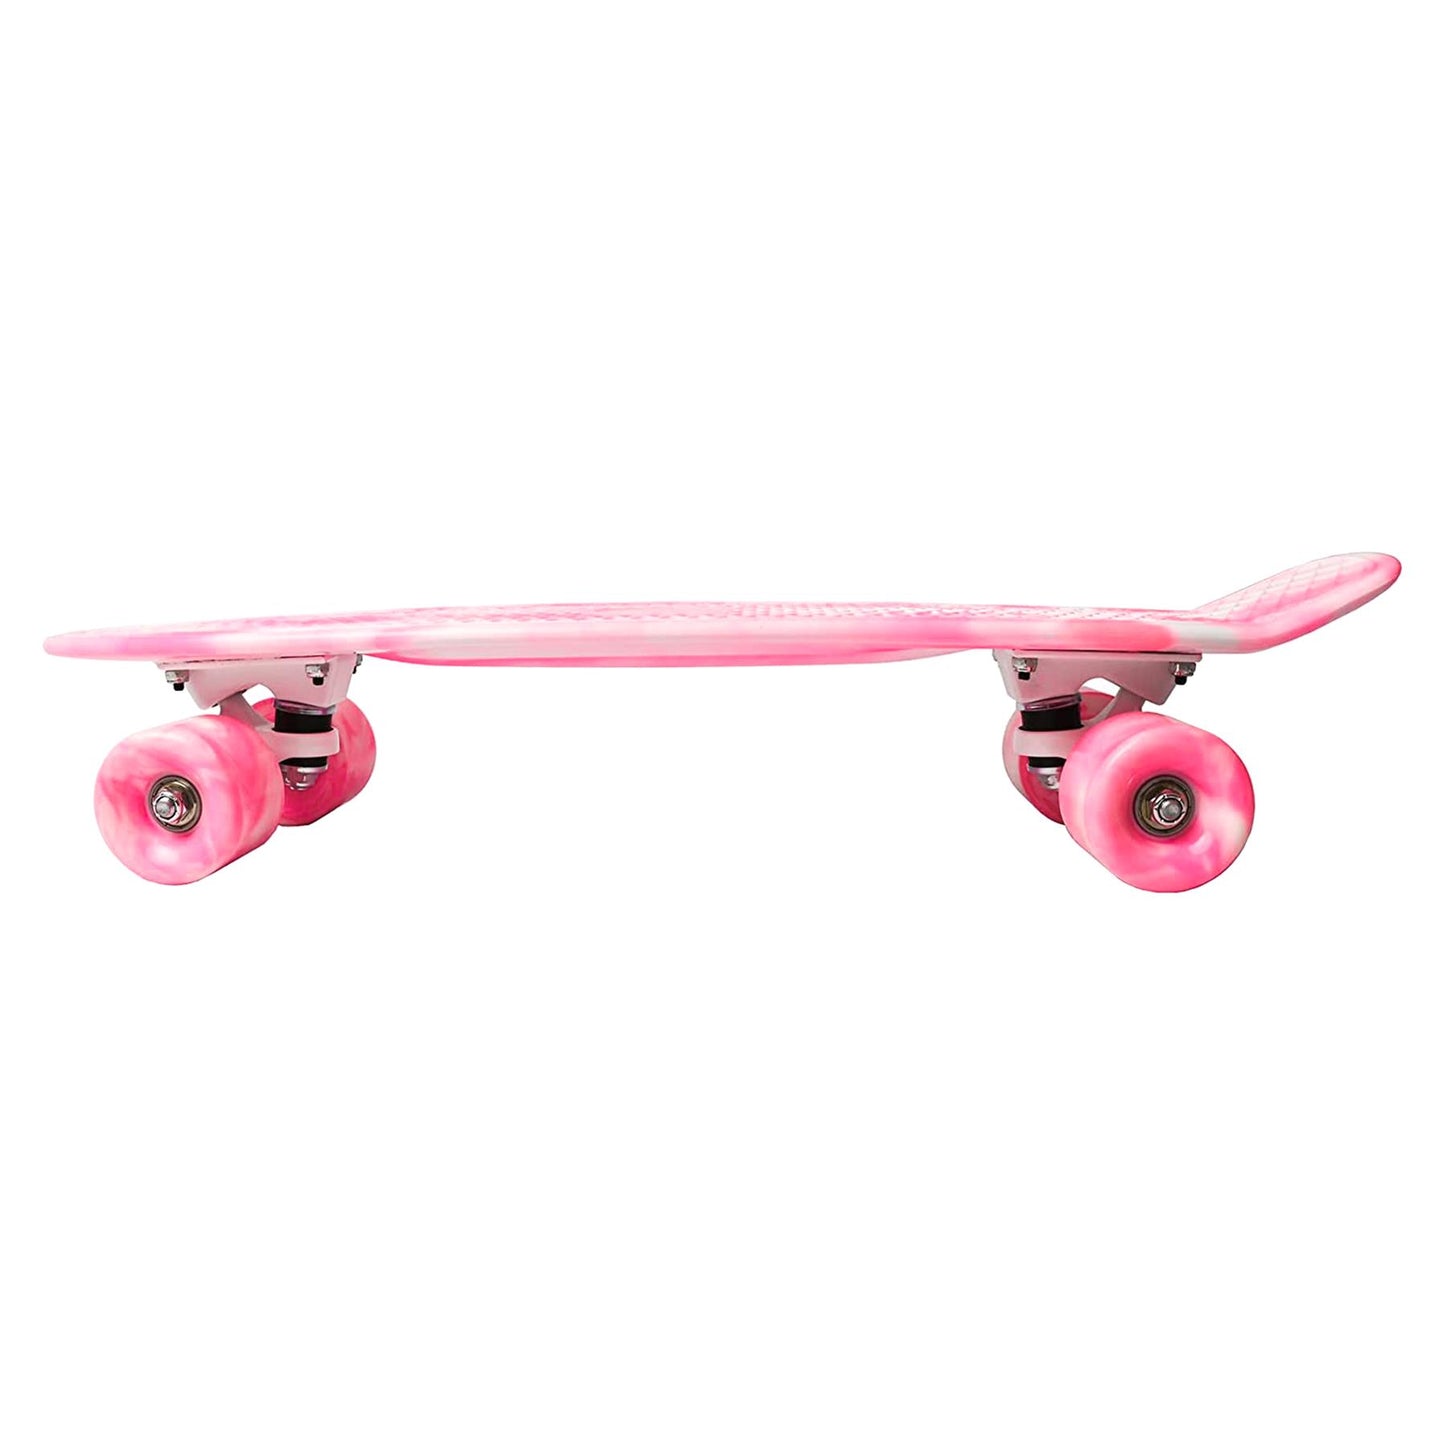 Retro Skateboard Pink by The Magic Toy Shop - UKBuyZone